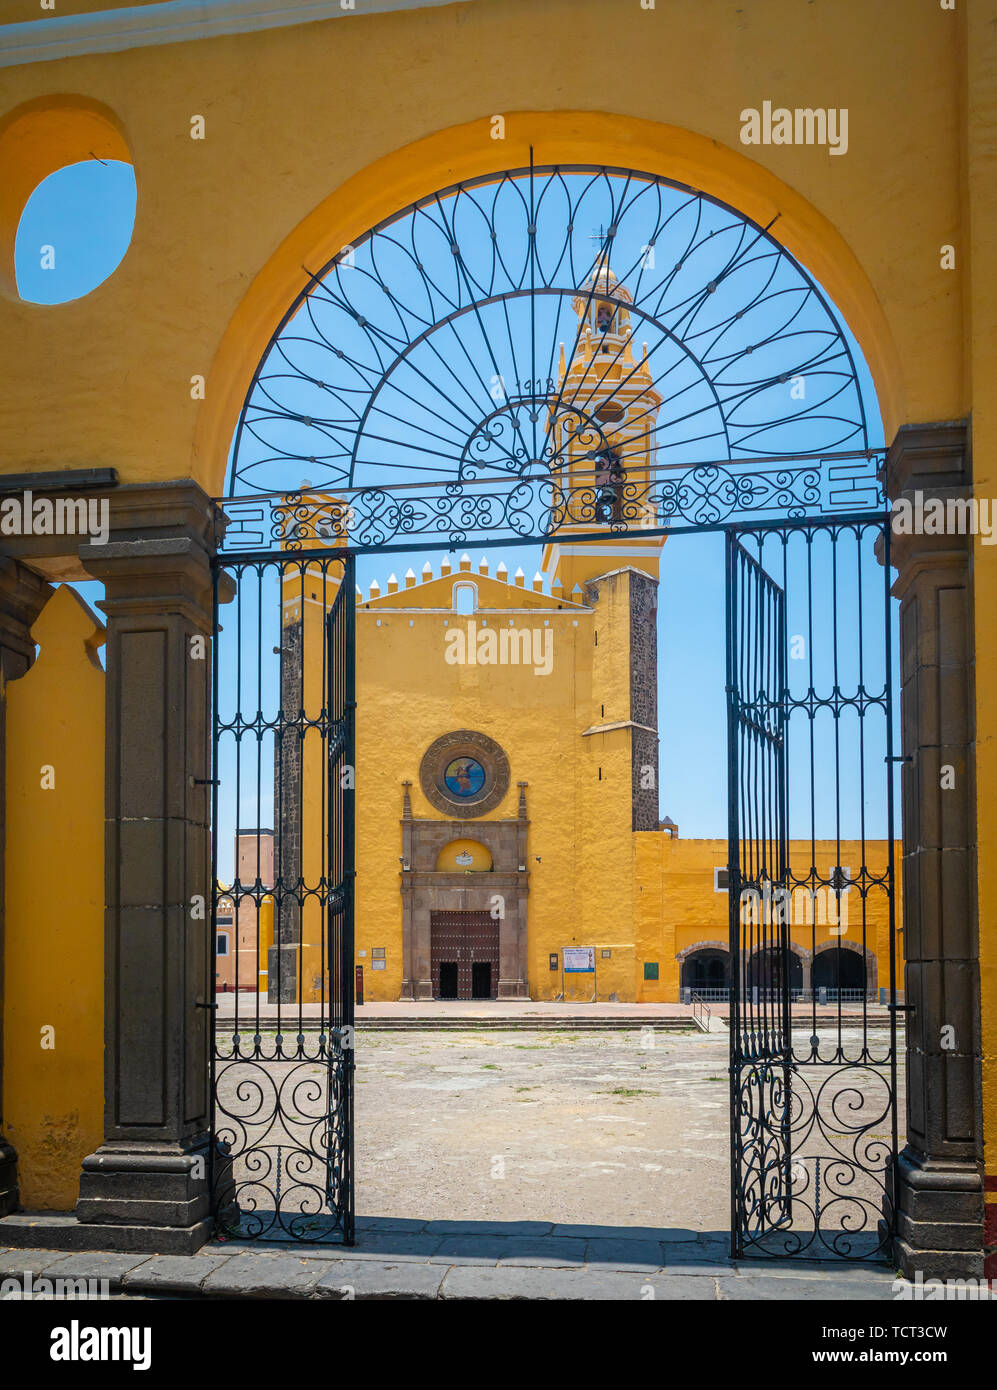 Convento Franciscano de San Gabriel Arcángel (San Gabriel Friary) is a church and friary in Cholula, Puebla, Mexico. Stock Photo